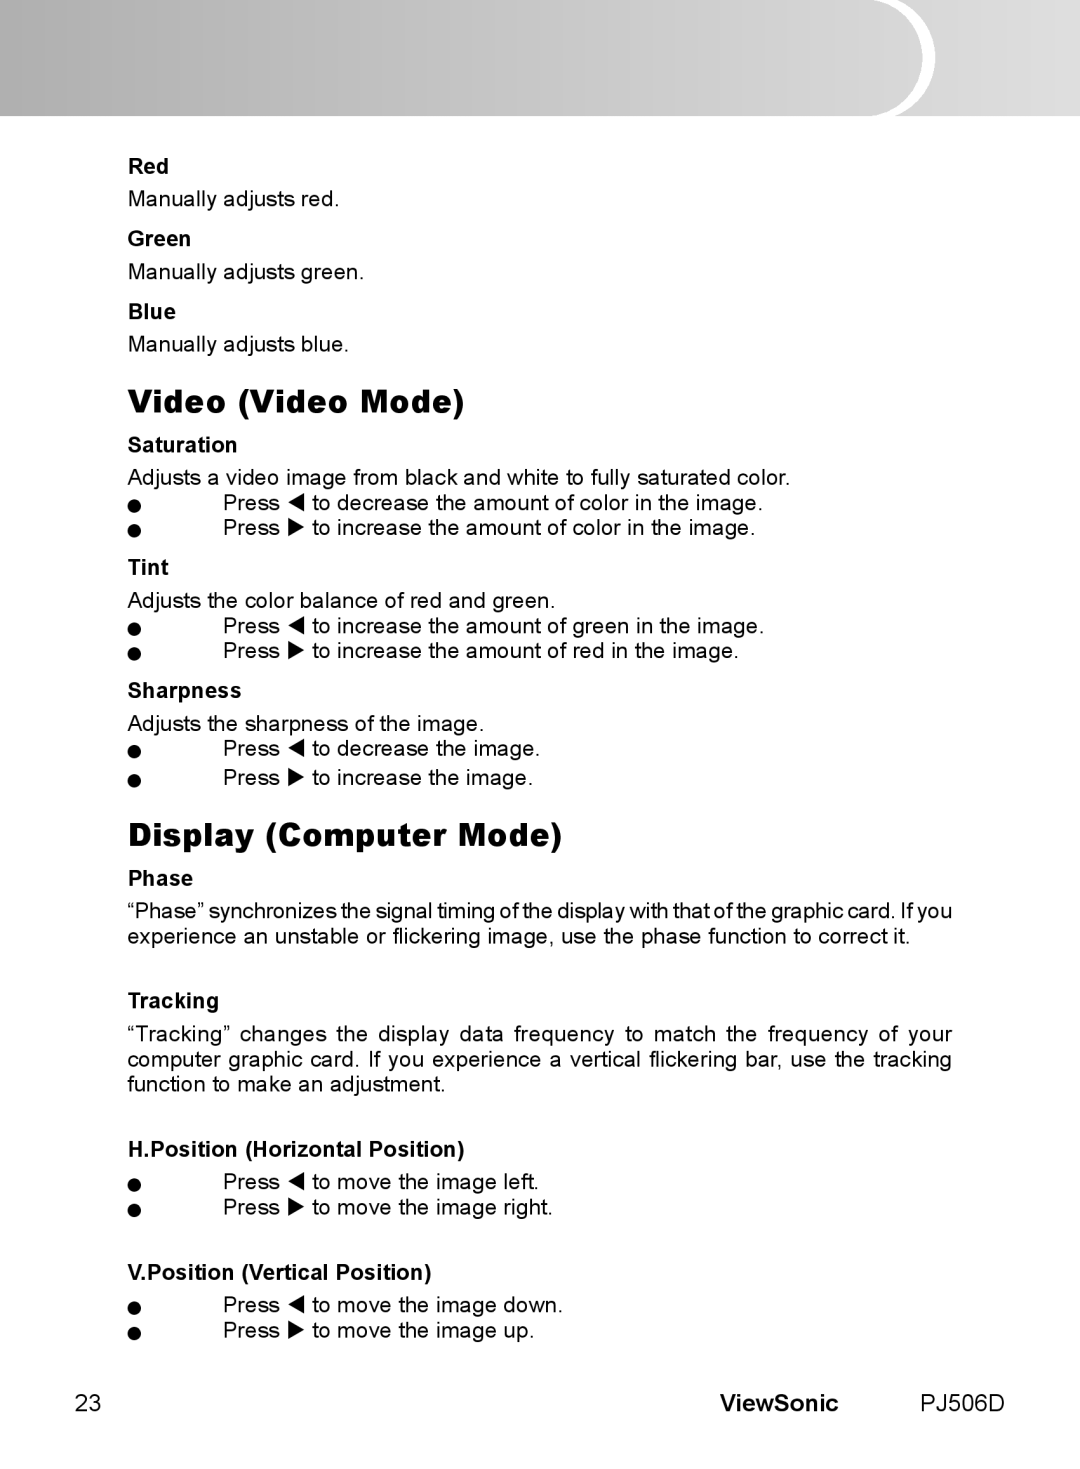 ViewSonic VS11452 manual Video Video Mode, Display Computer Mode, ViewSonic 